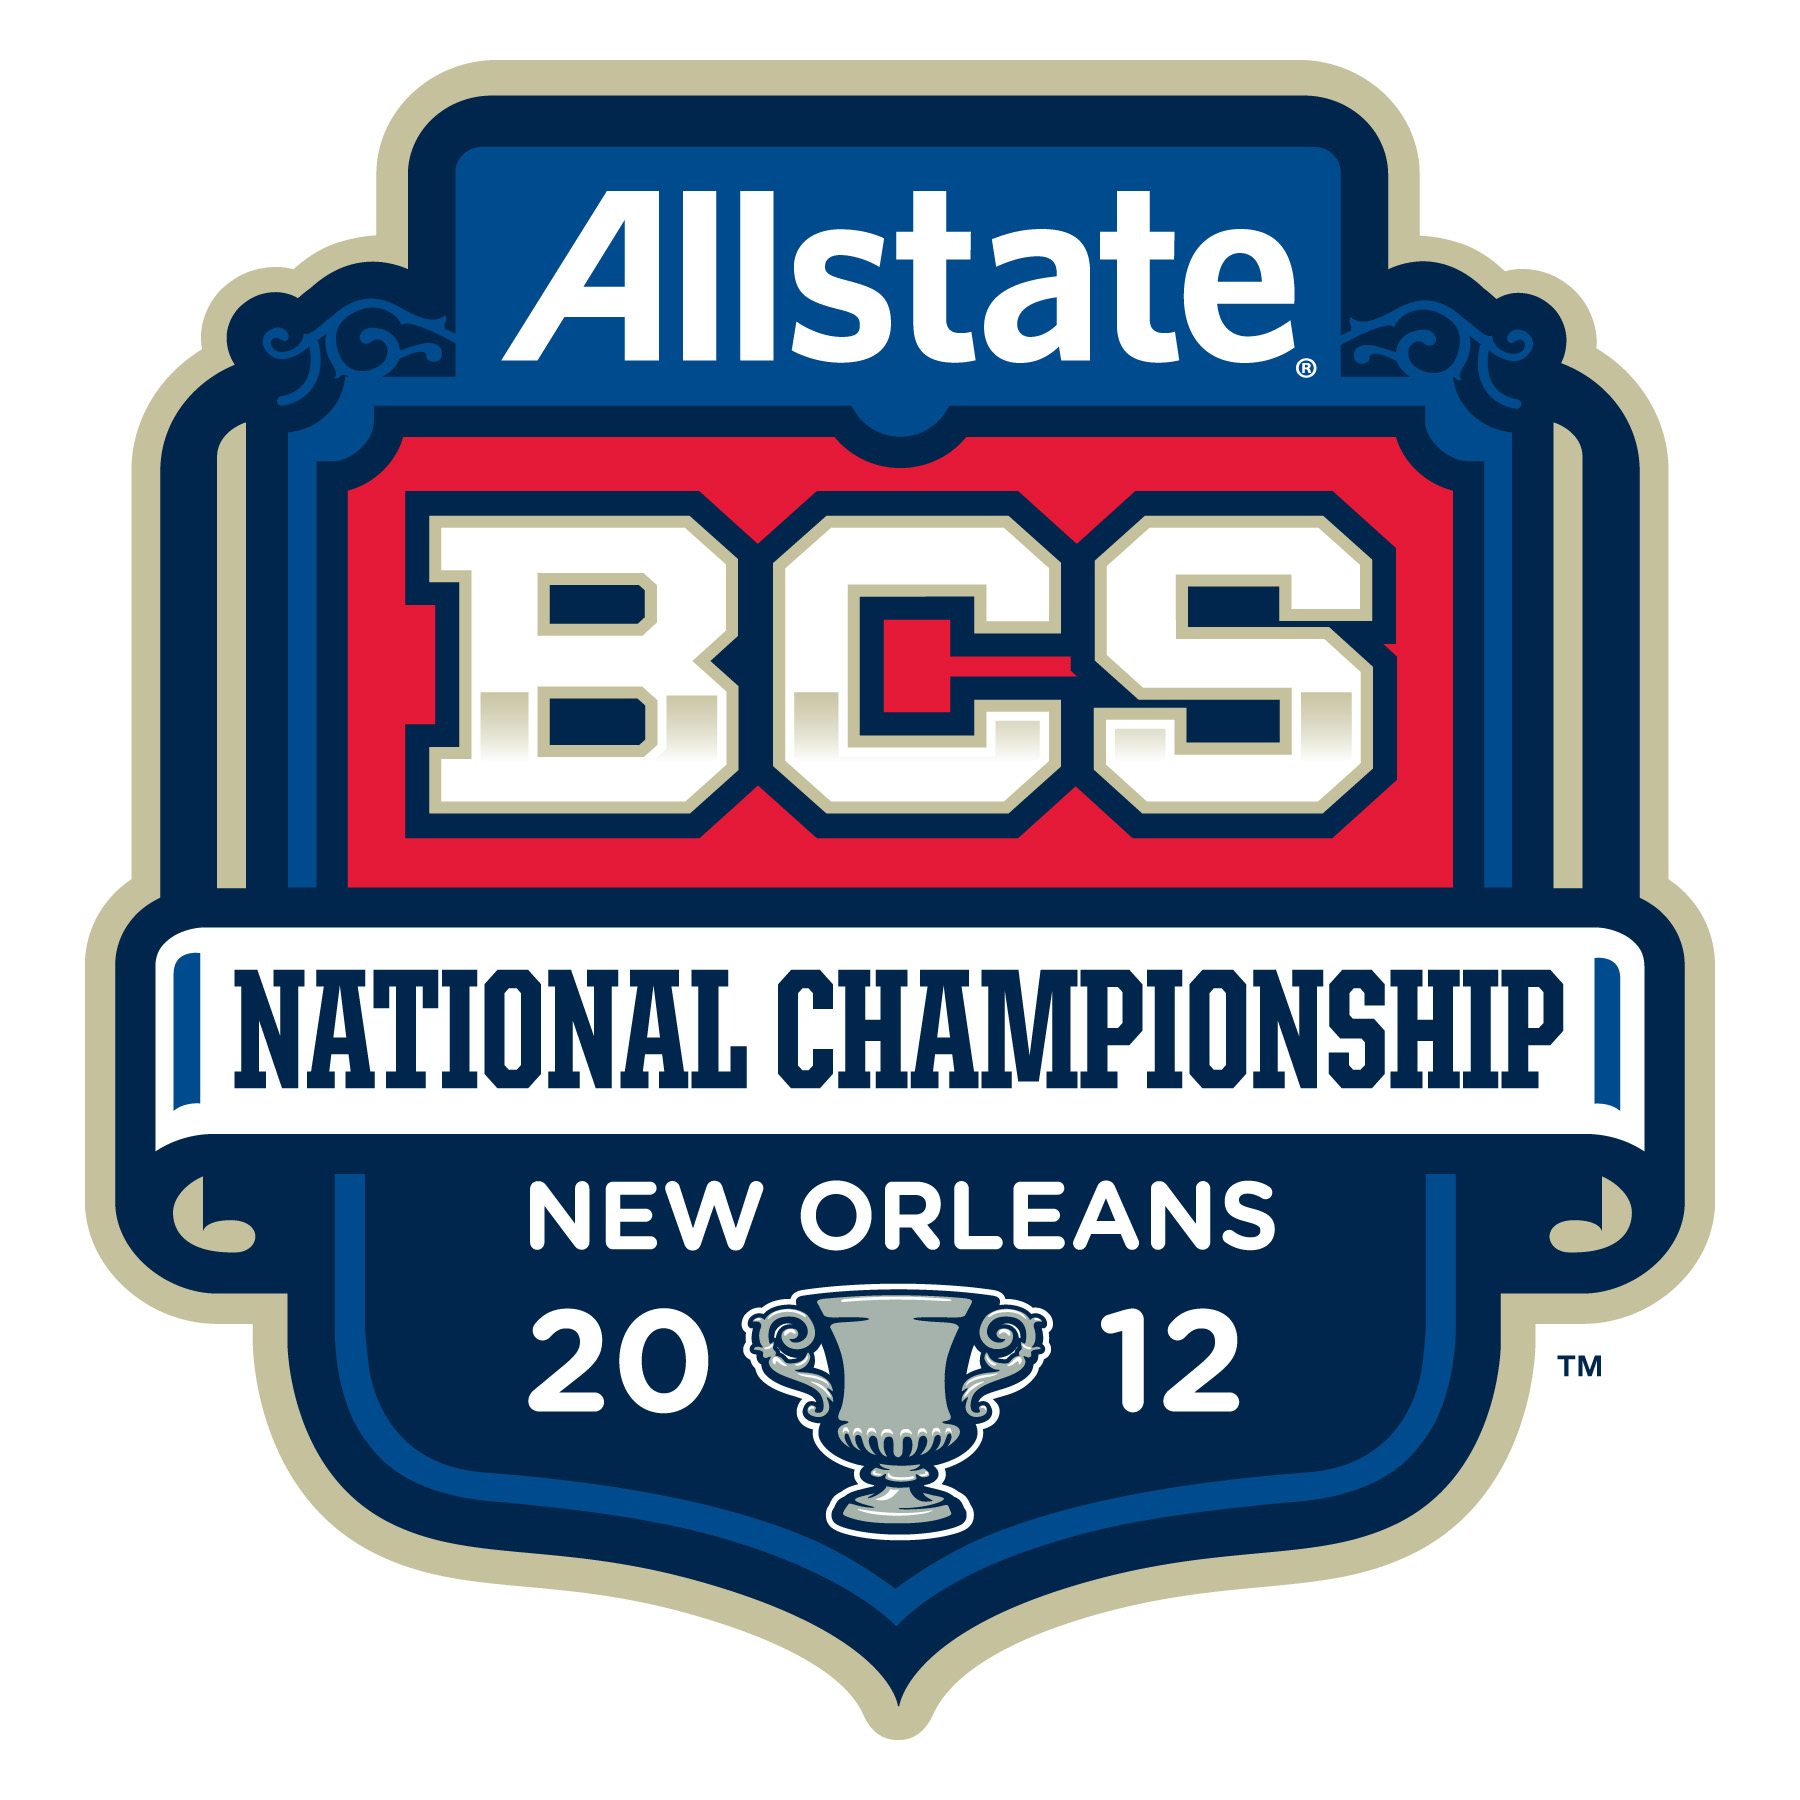 National Championship Logos Pc Android iPhone And iPad Wallpaper